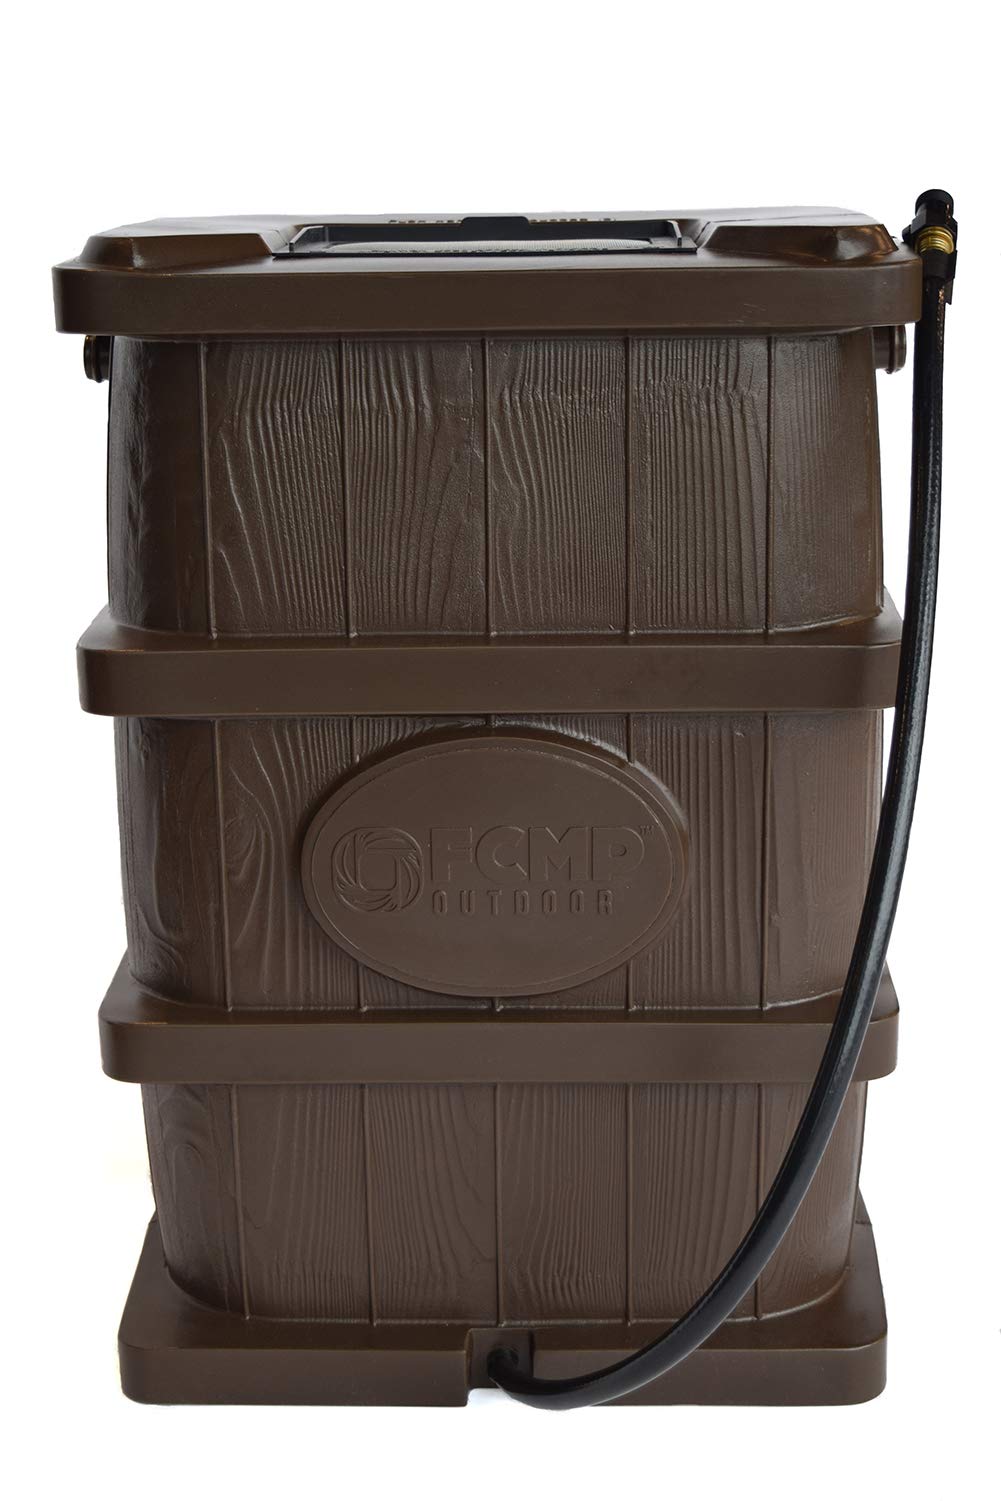 FCMP Outdoor Wood Grain 45-Gallon Rain Barrel